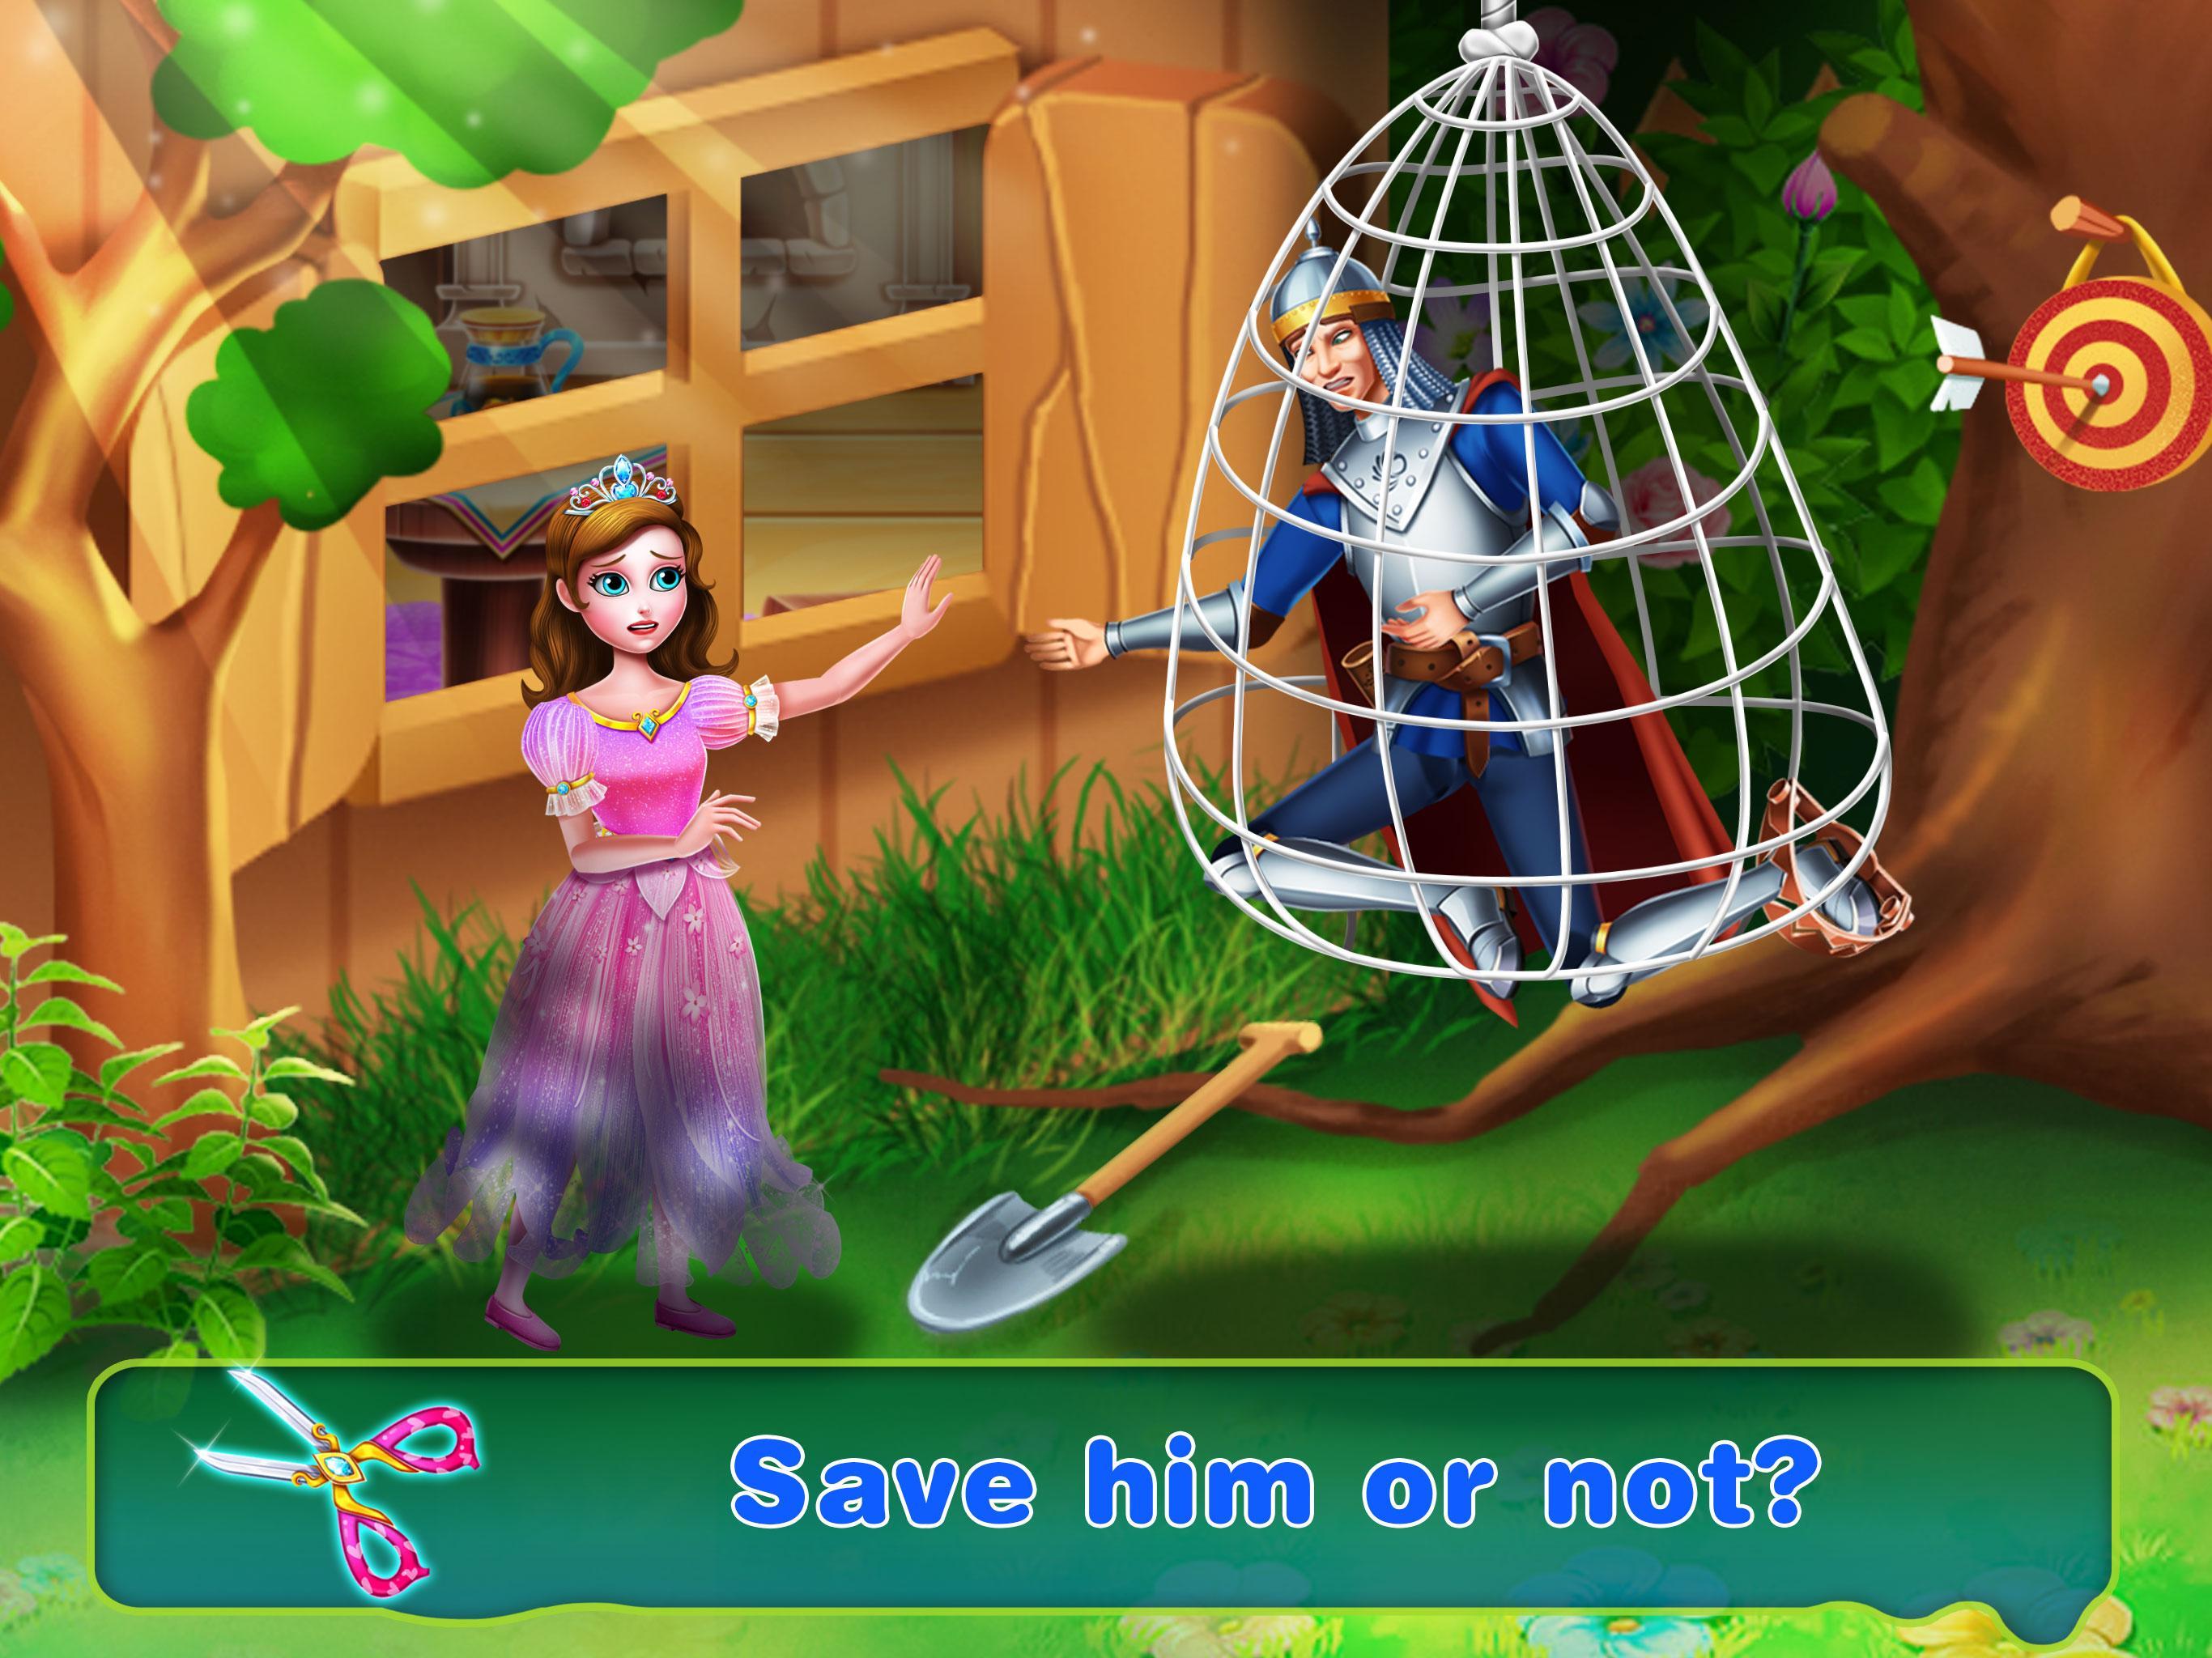 Игра спасите принца. Игра спасти принцессу. Программа спасения принцесс. Дидактическая игра «спасение принцессы». Принц спасает девушку игра на андроид.